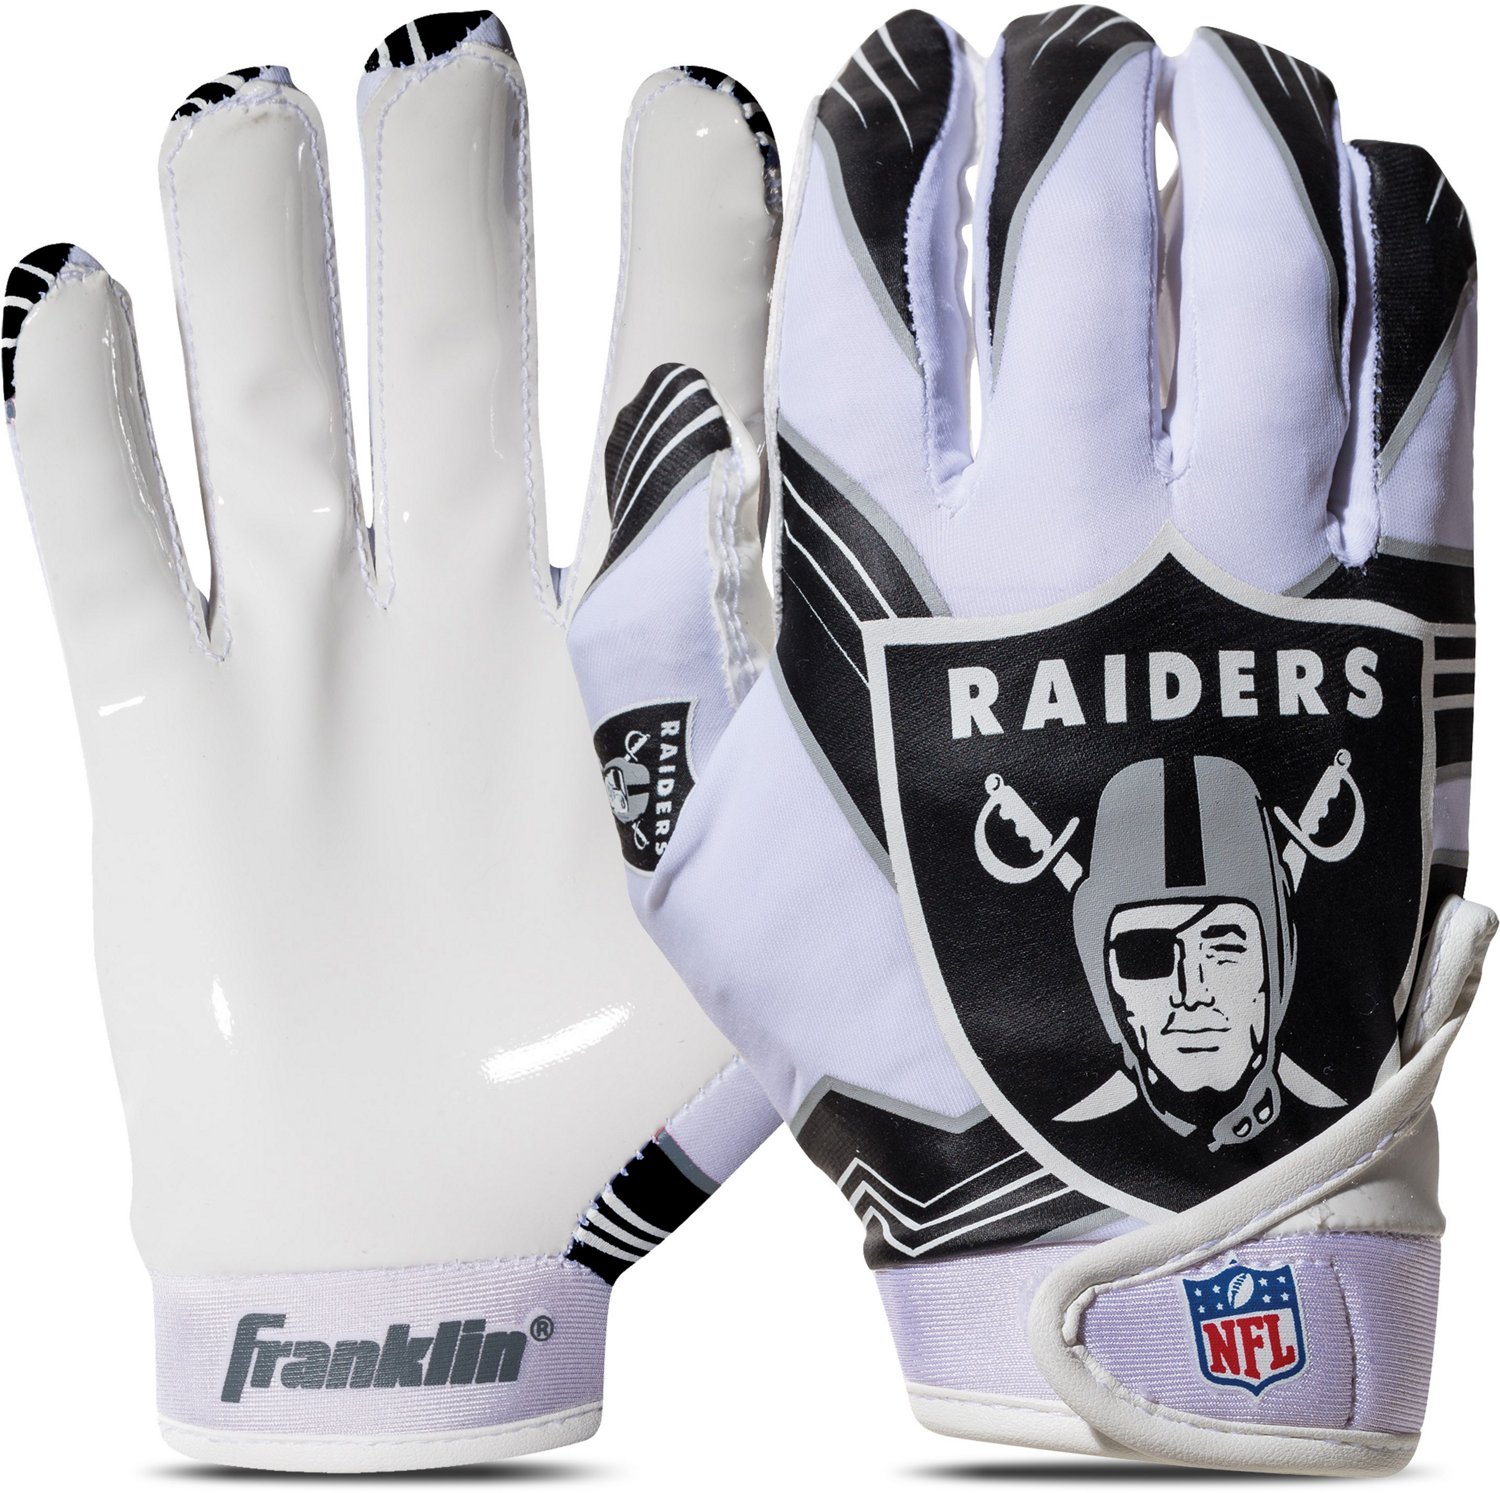 Officially Licensed Gloves - Las Vegas Raiders